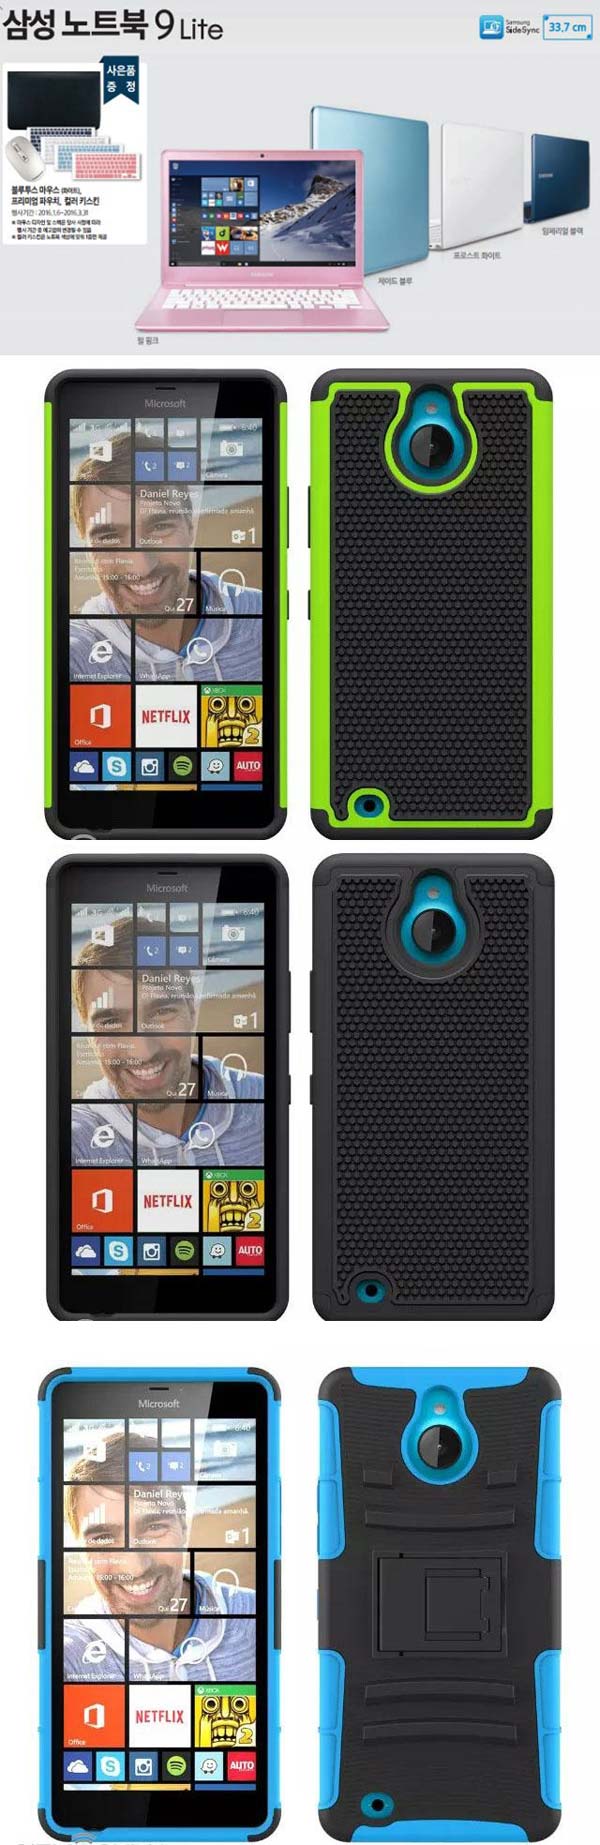 Samsung Ativ Book 9 Lite и Microsoft Lumia 850